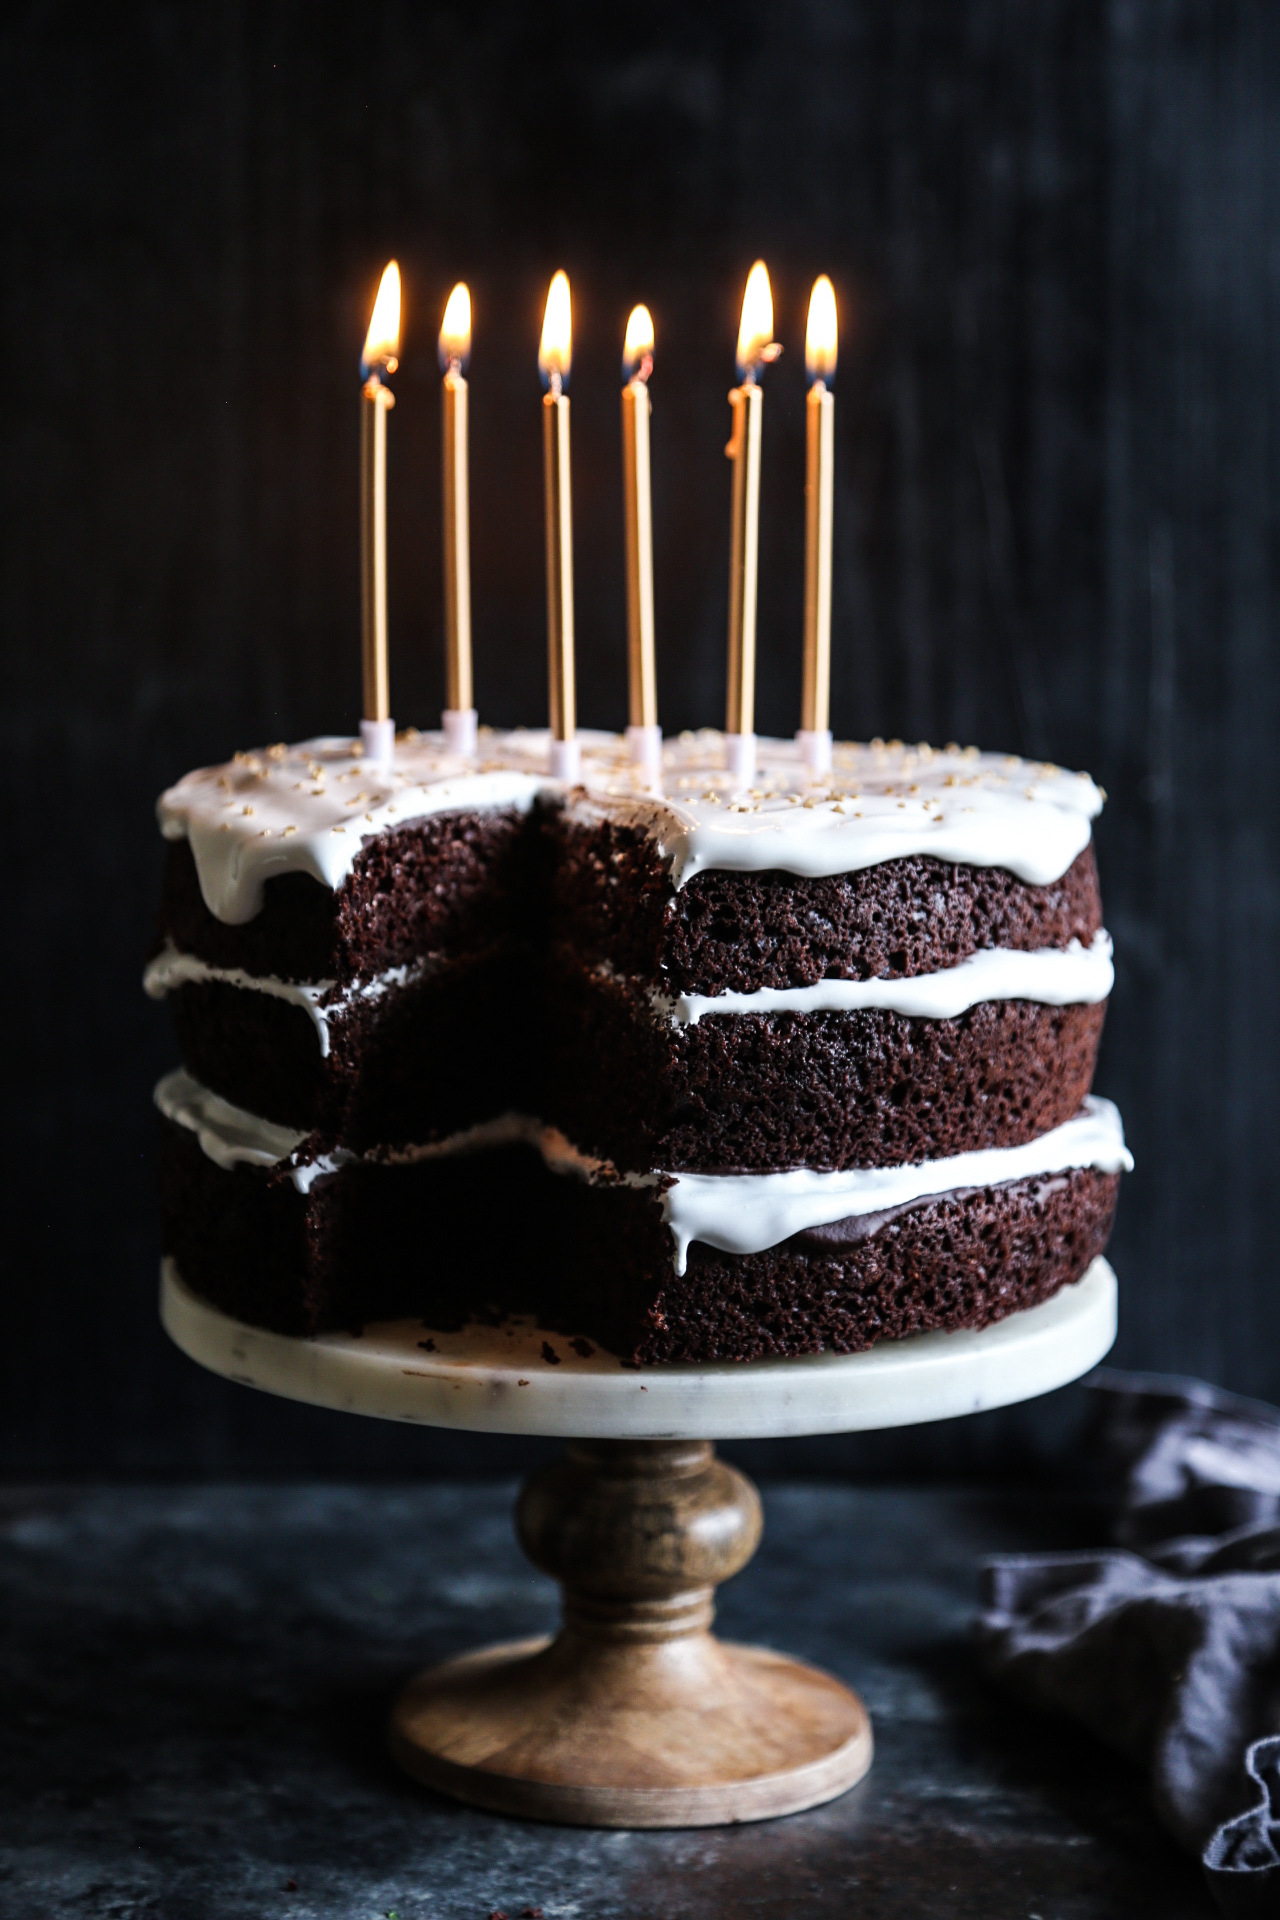 Gluten-free cake recipe: Flourless chocolate cake